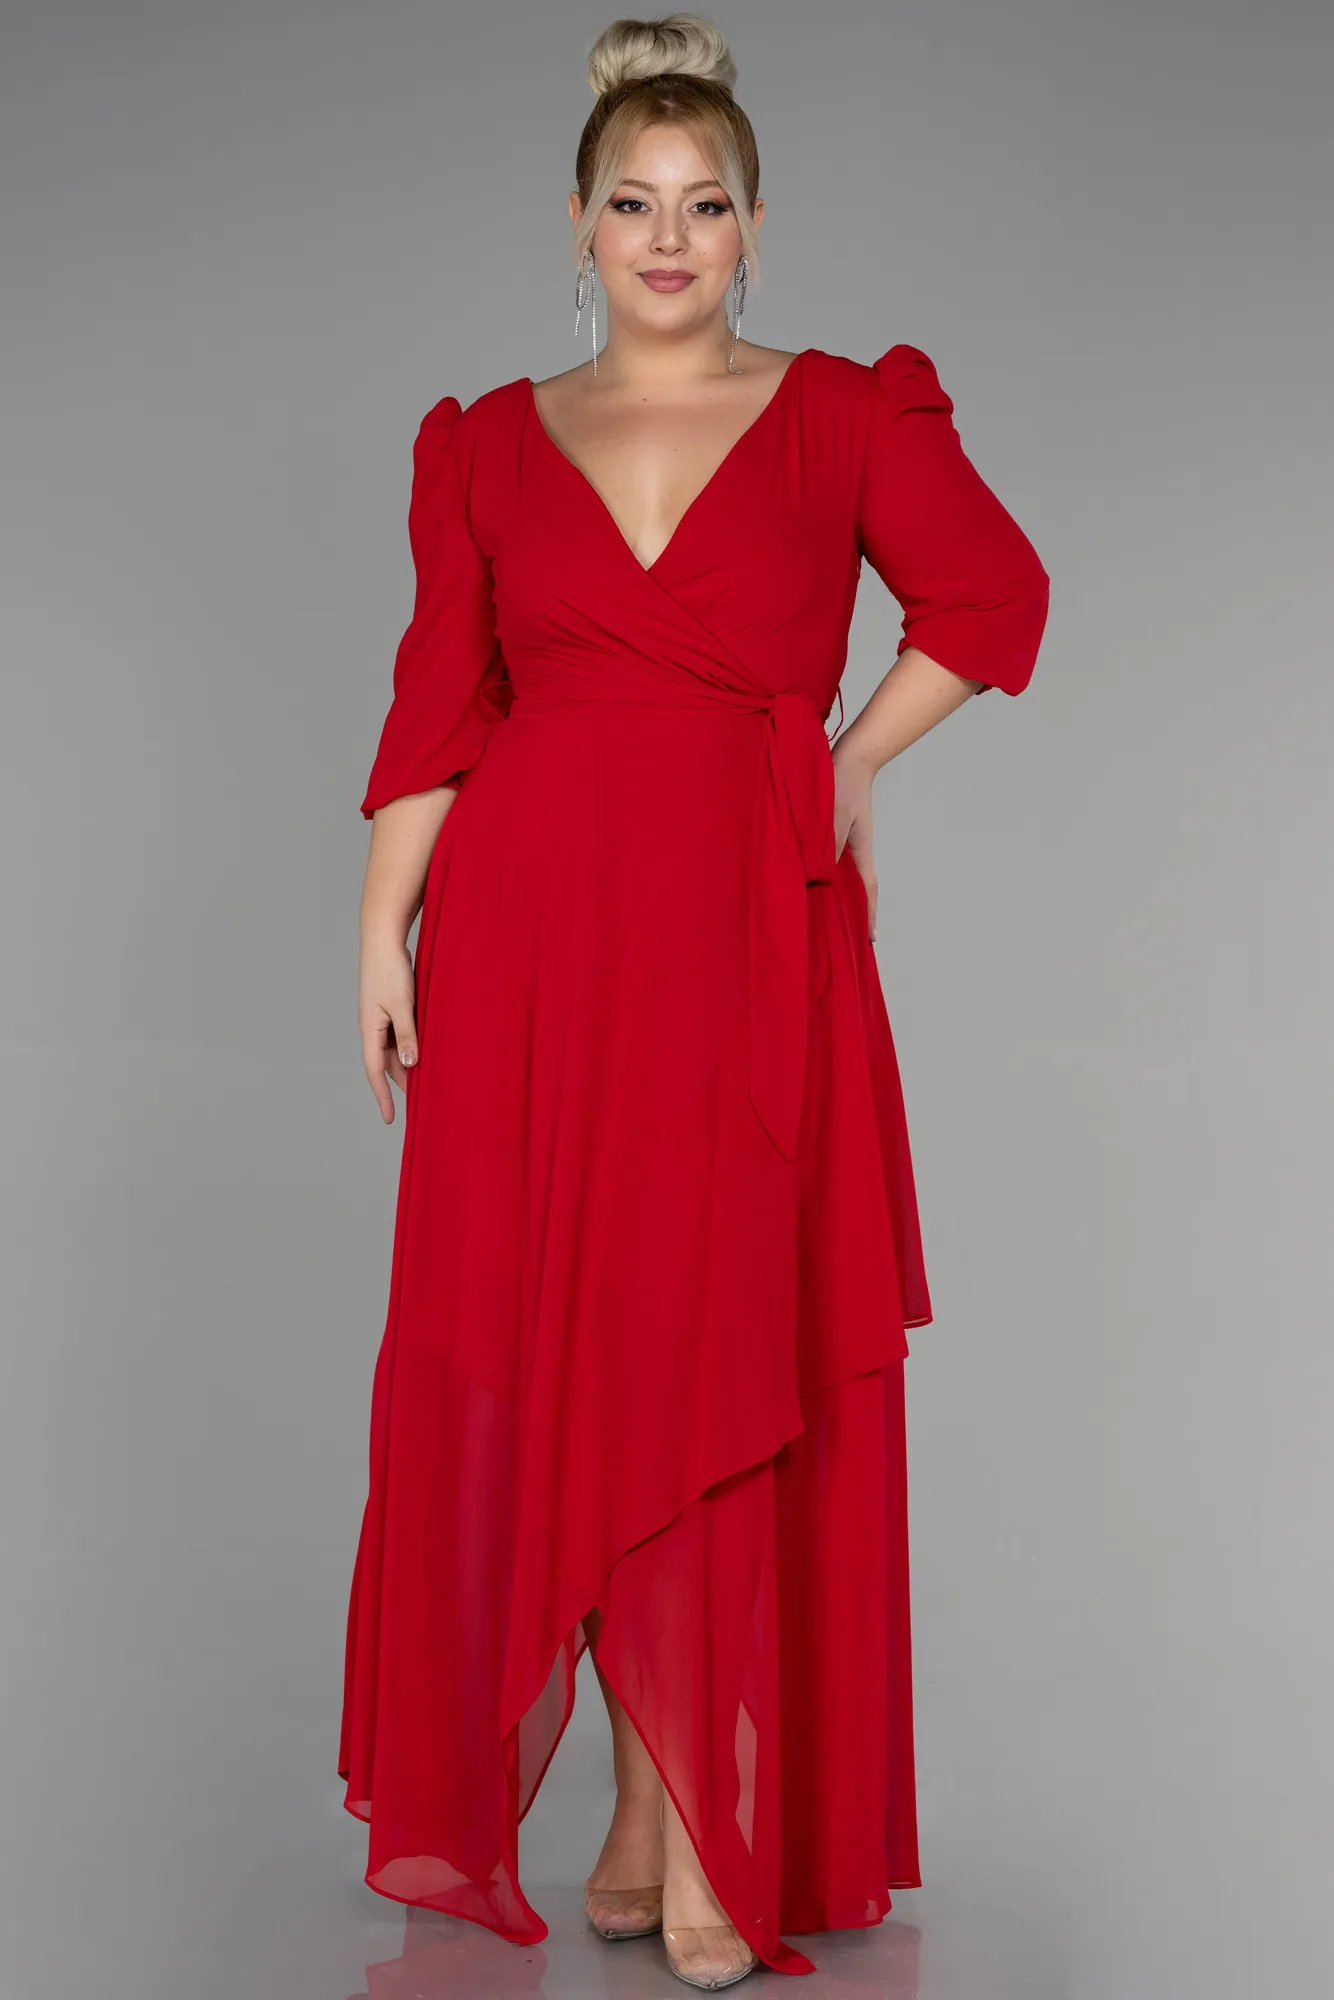 Red-Midi Chiffon Oversized Evening Dress ABK1083